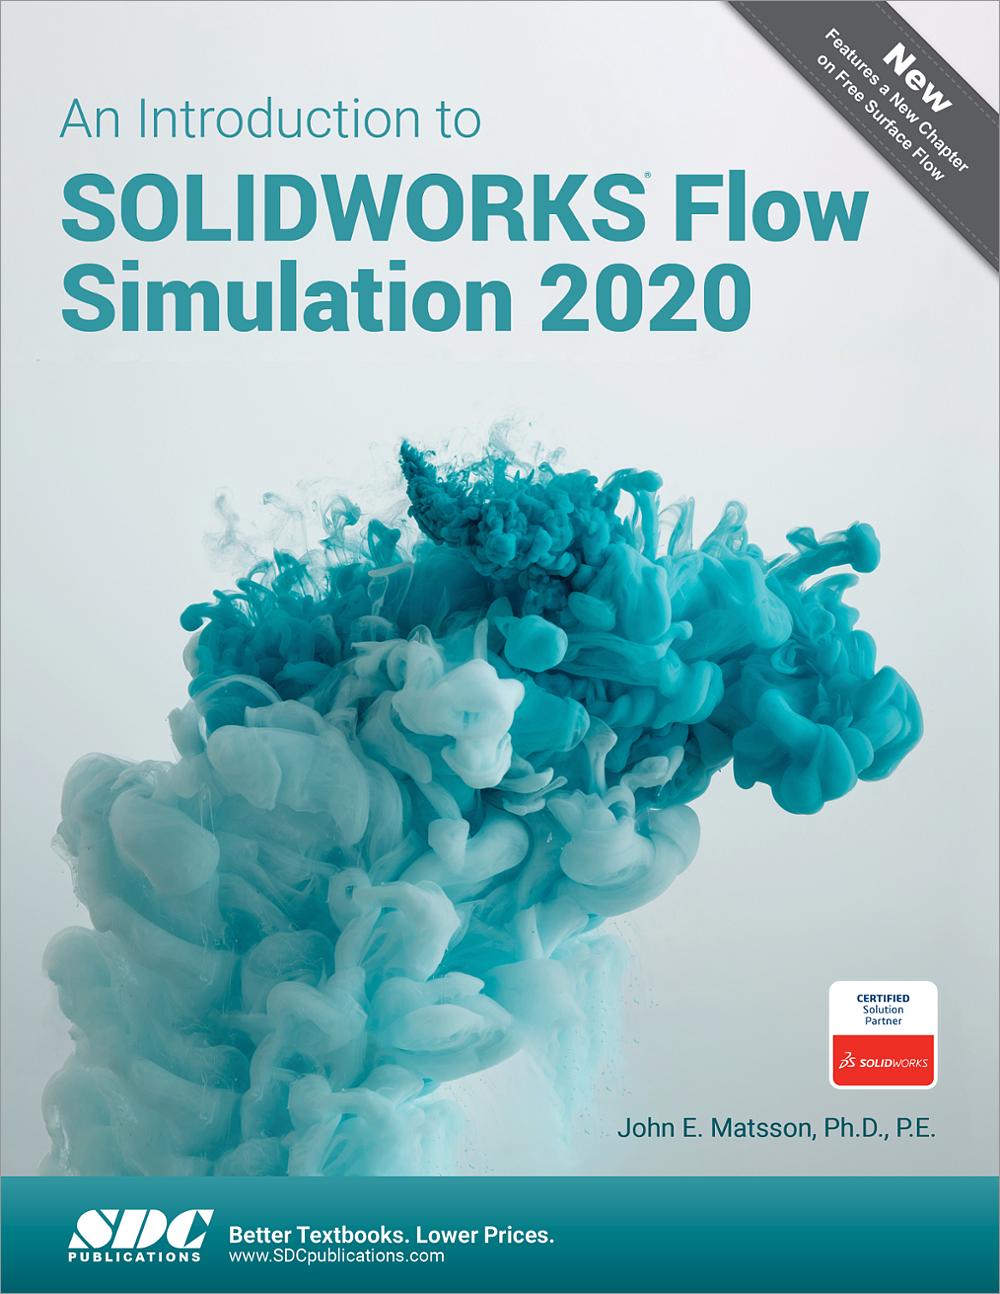 solidworks flow simulation 2013 download free